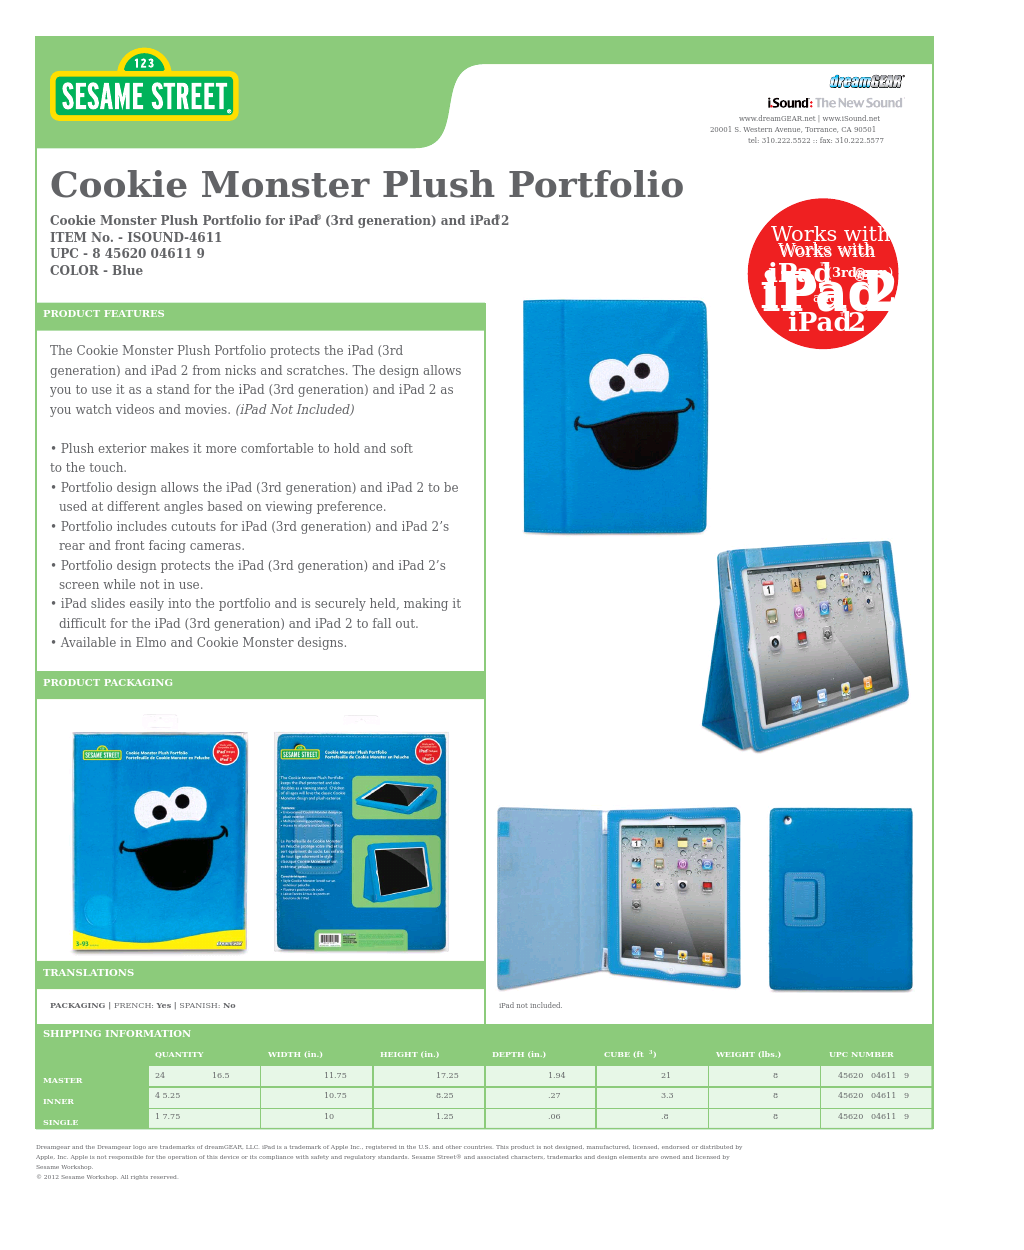 Cookie Monster Plush Portfolio for iPad 2 - Sell Sheet